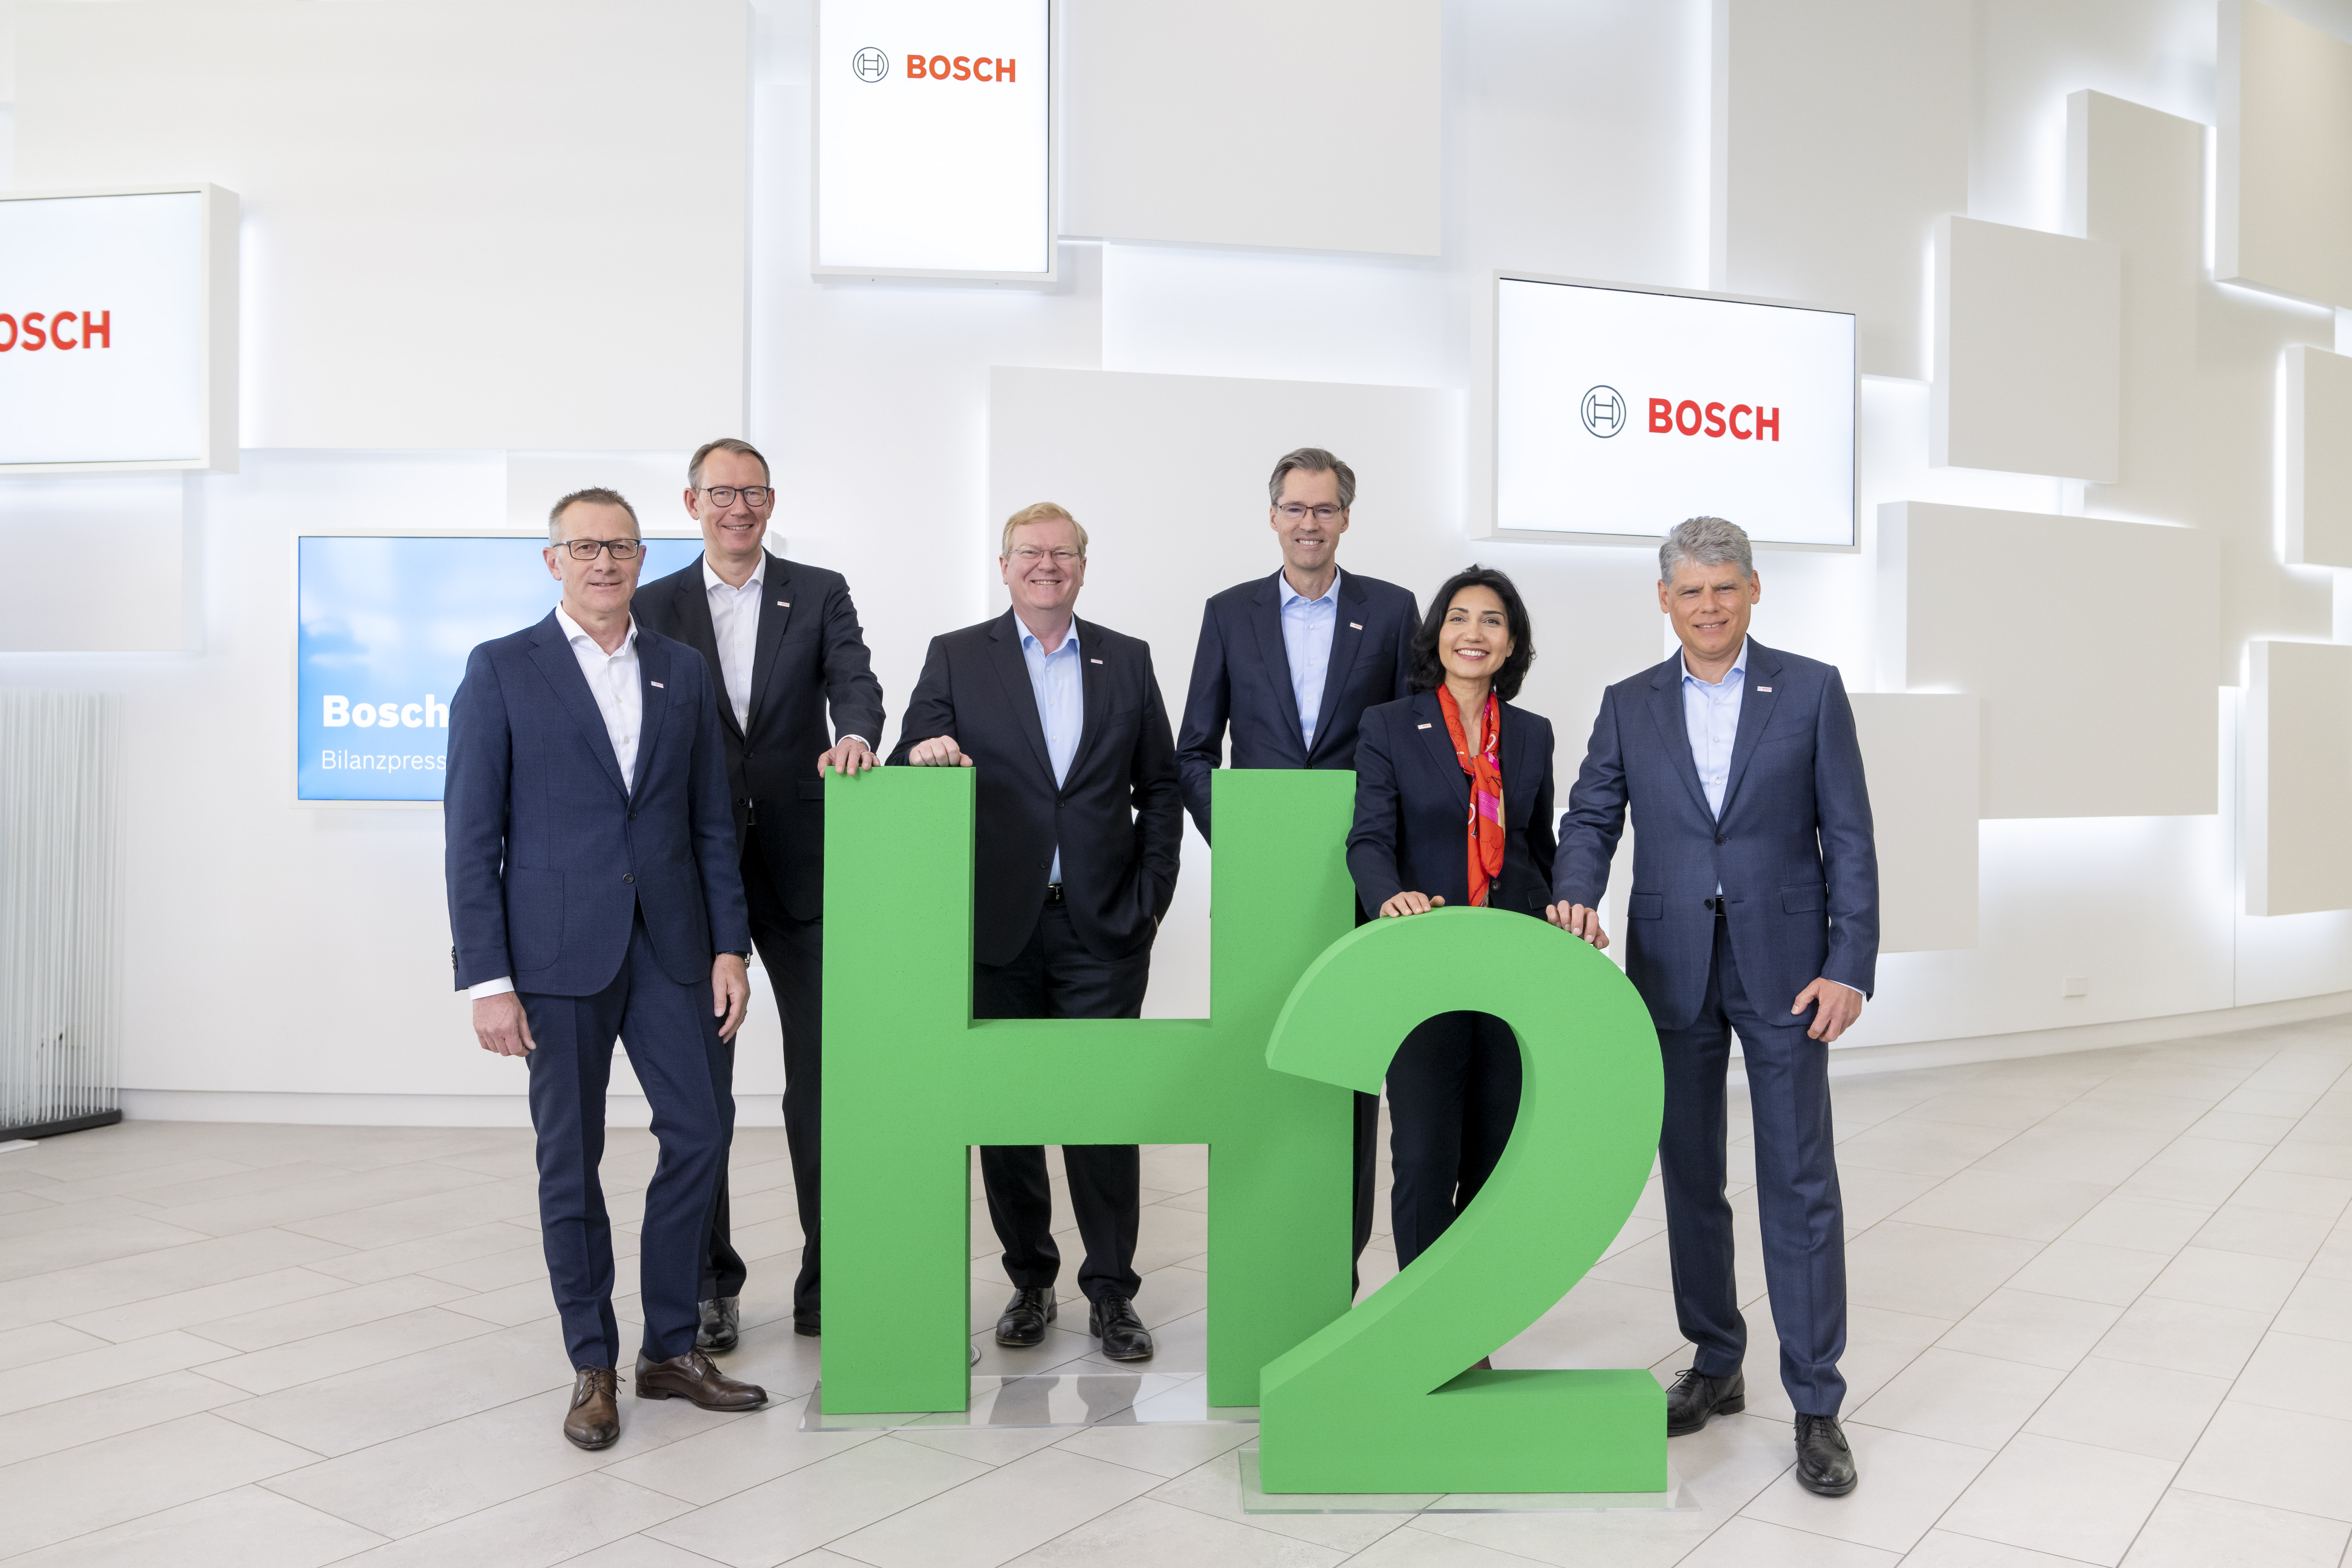 Bosch Bilanzpressekonferenz 2022